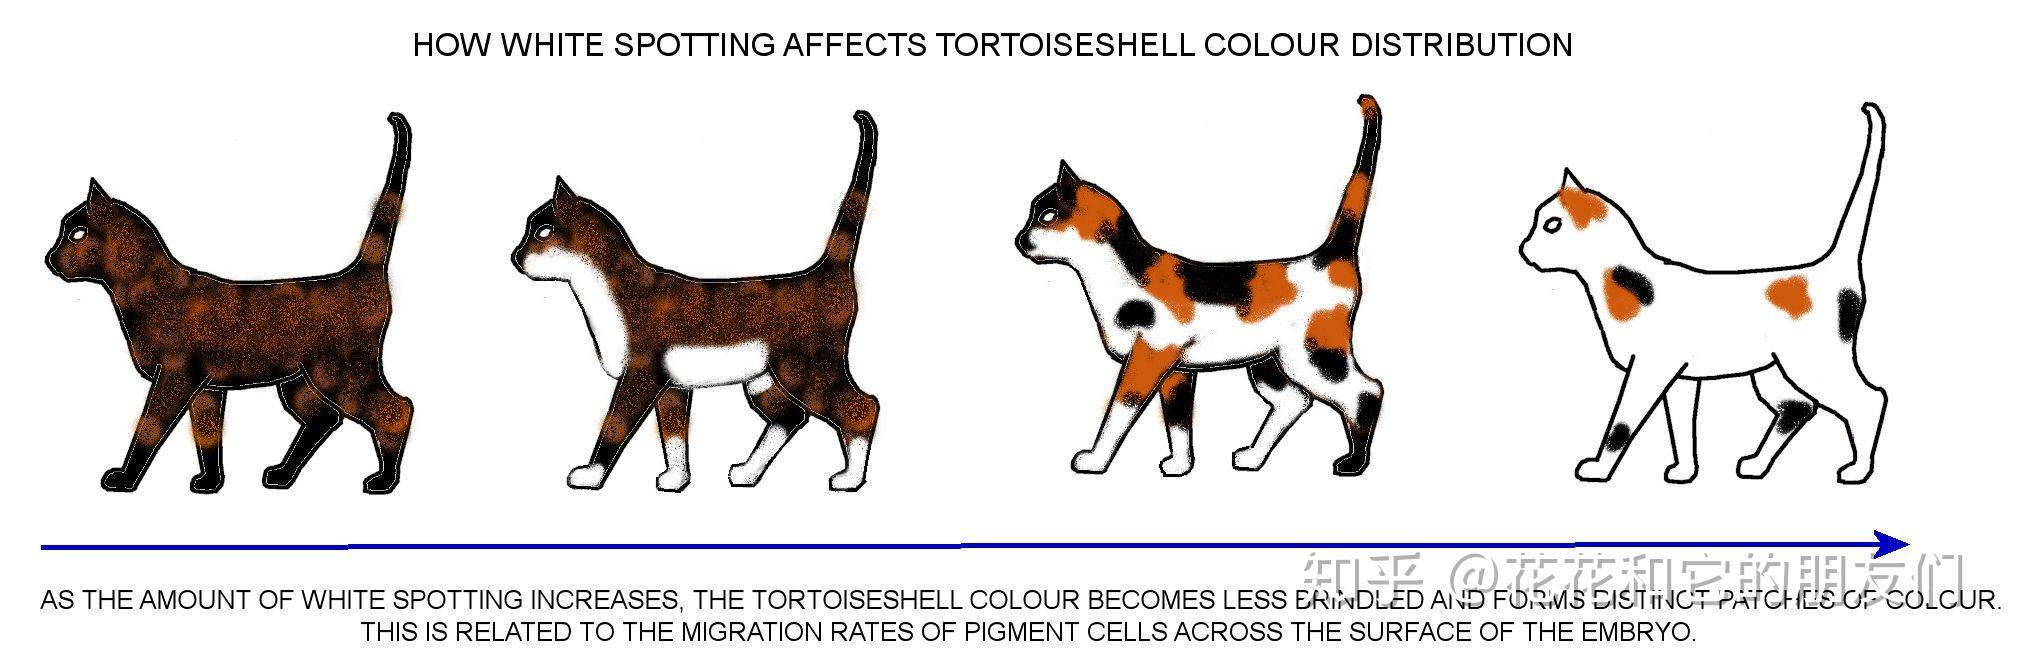 calico cat vs tortoiseshell